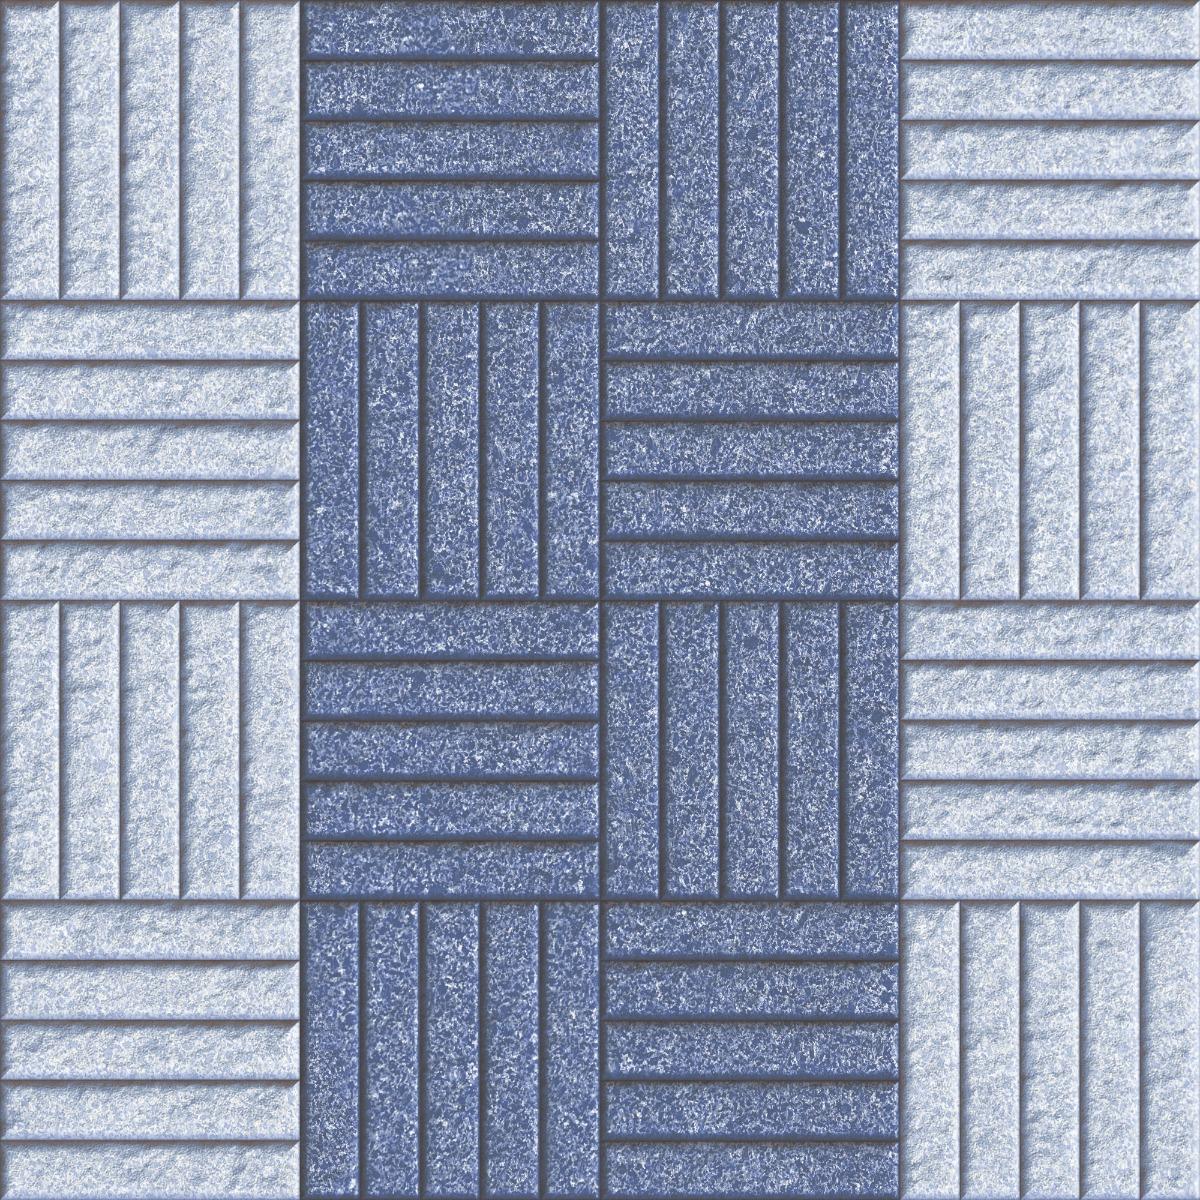 Blue Tiles for Commercial Tiles, Parking Tiles, Office Tiles, Pathway Tiles, Hospital Tiles, High Traffic Tiles, Bar/Restaurant, Outdoor Area, Porch/Parking